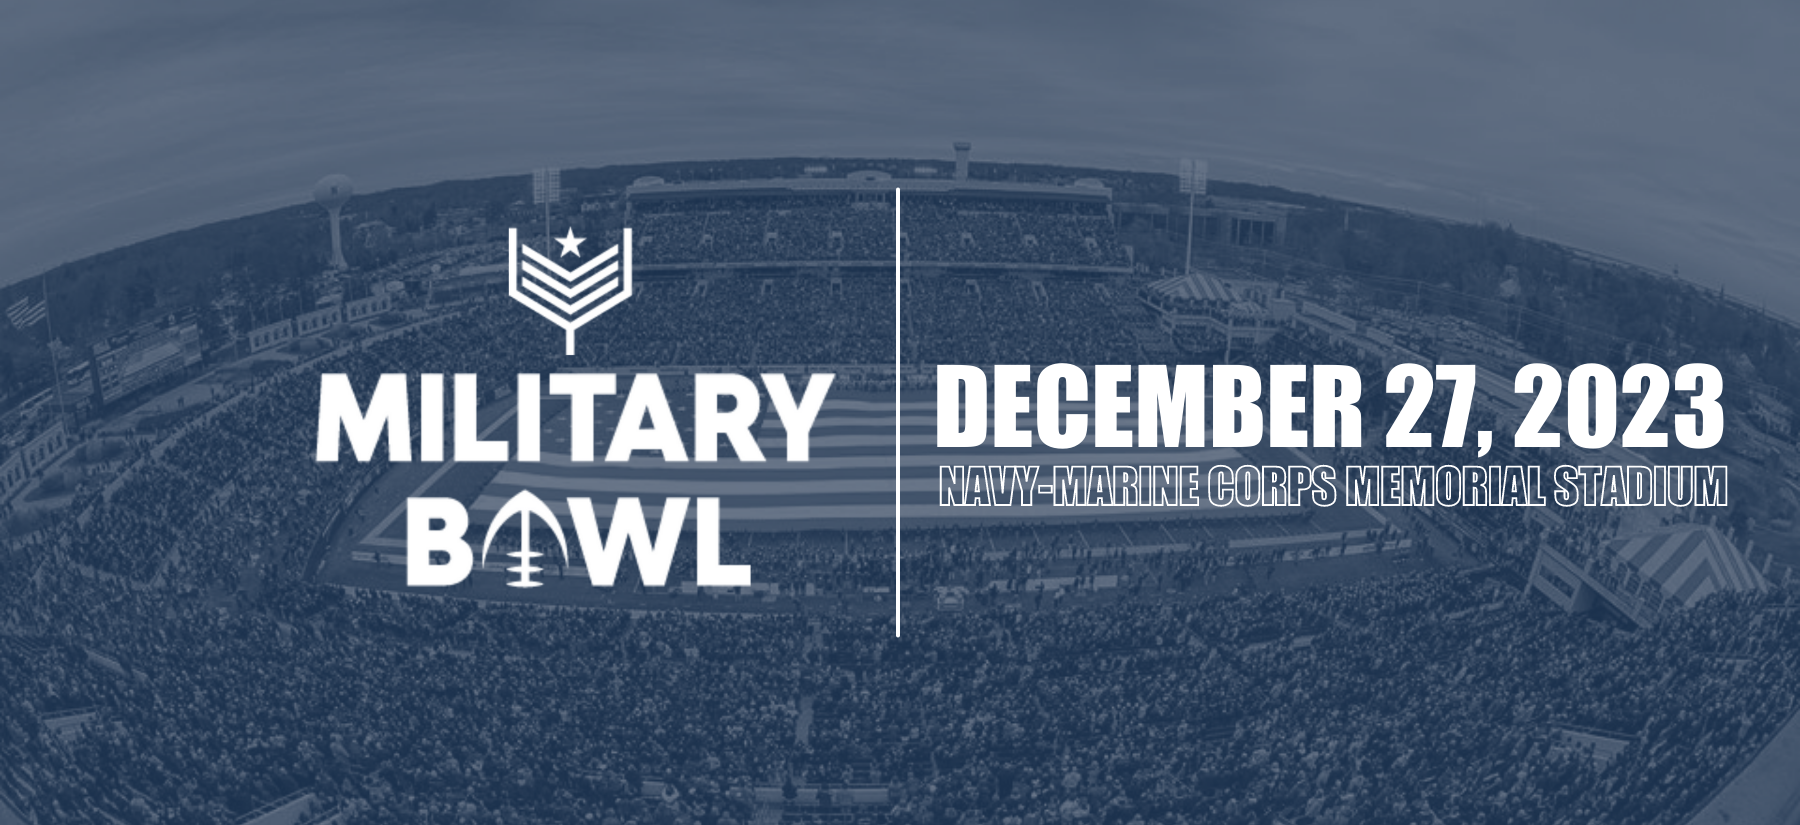 2023 MILITARY BOWL SET FOR WEDNESDAY, DECEMBER 27 Military Bowl